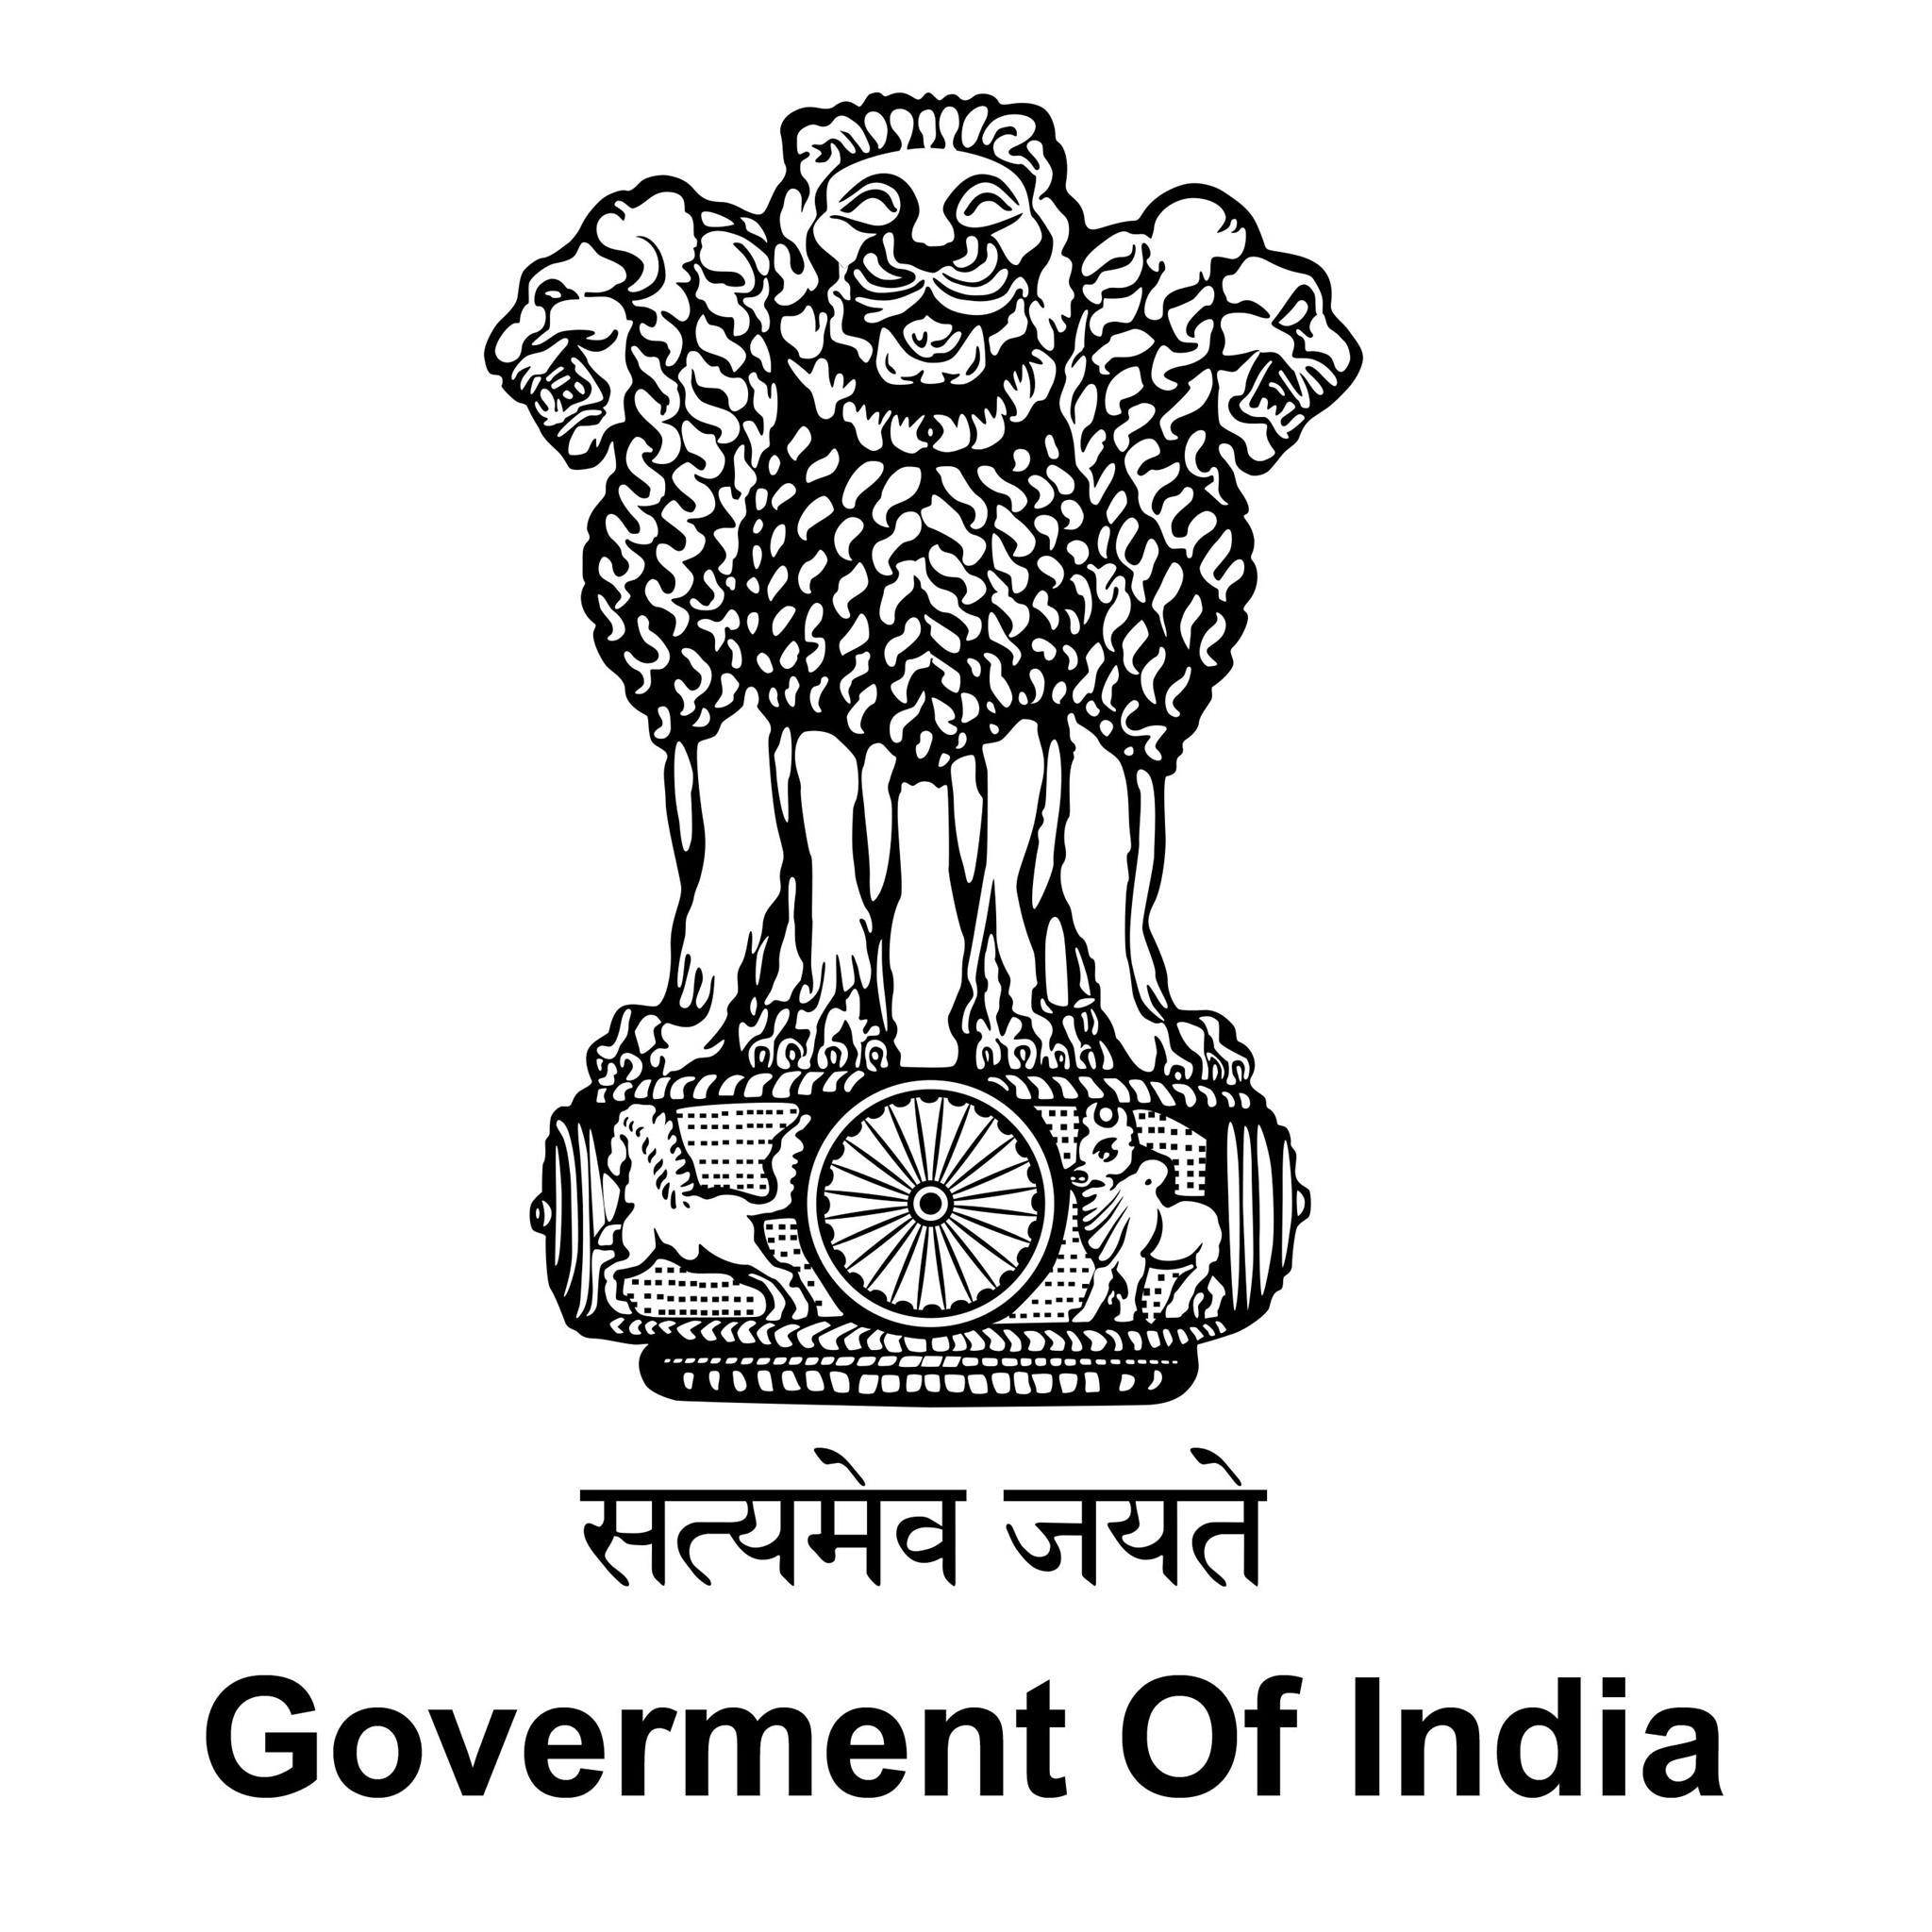 India Logo - logo designs of Government of India setups or companies